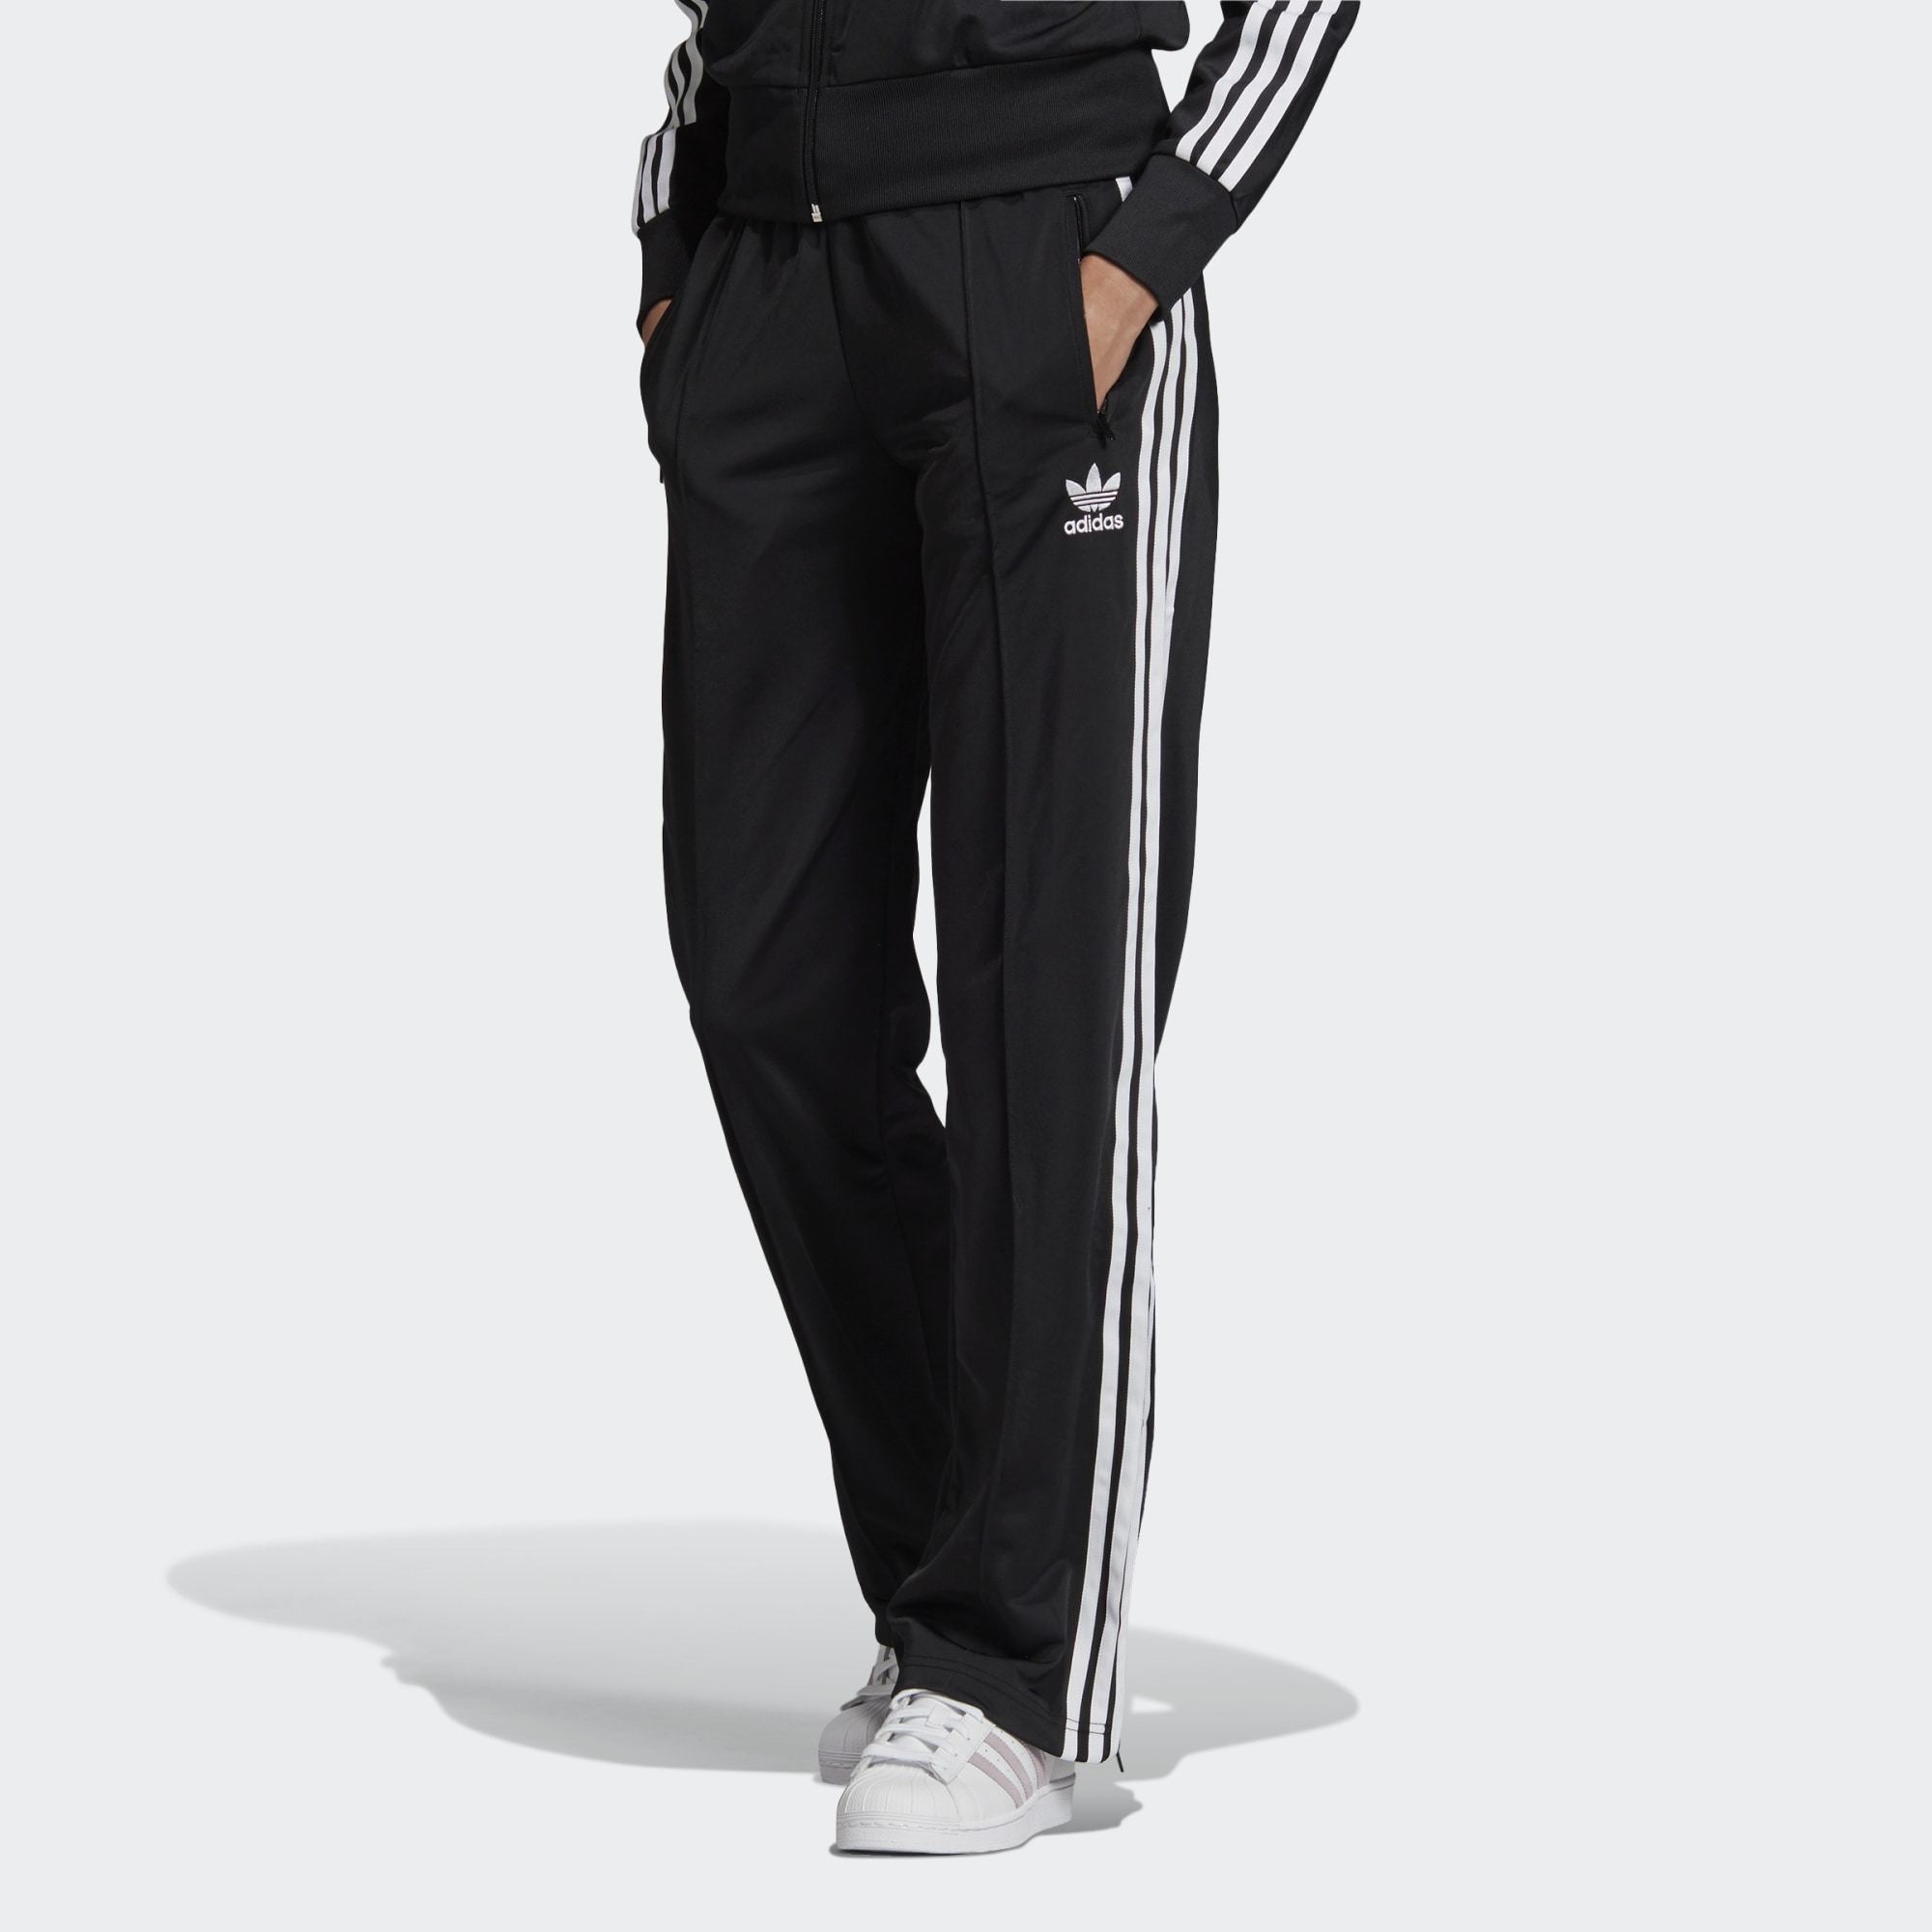 [ED4791] Womens Adidas Originals Firebird Track Pants